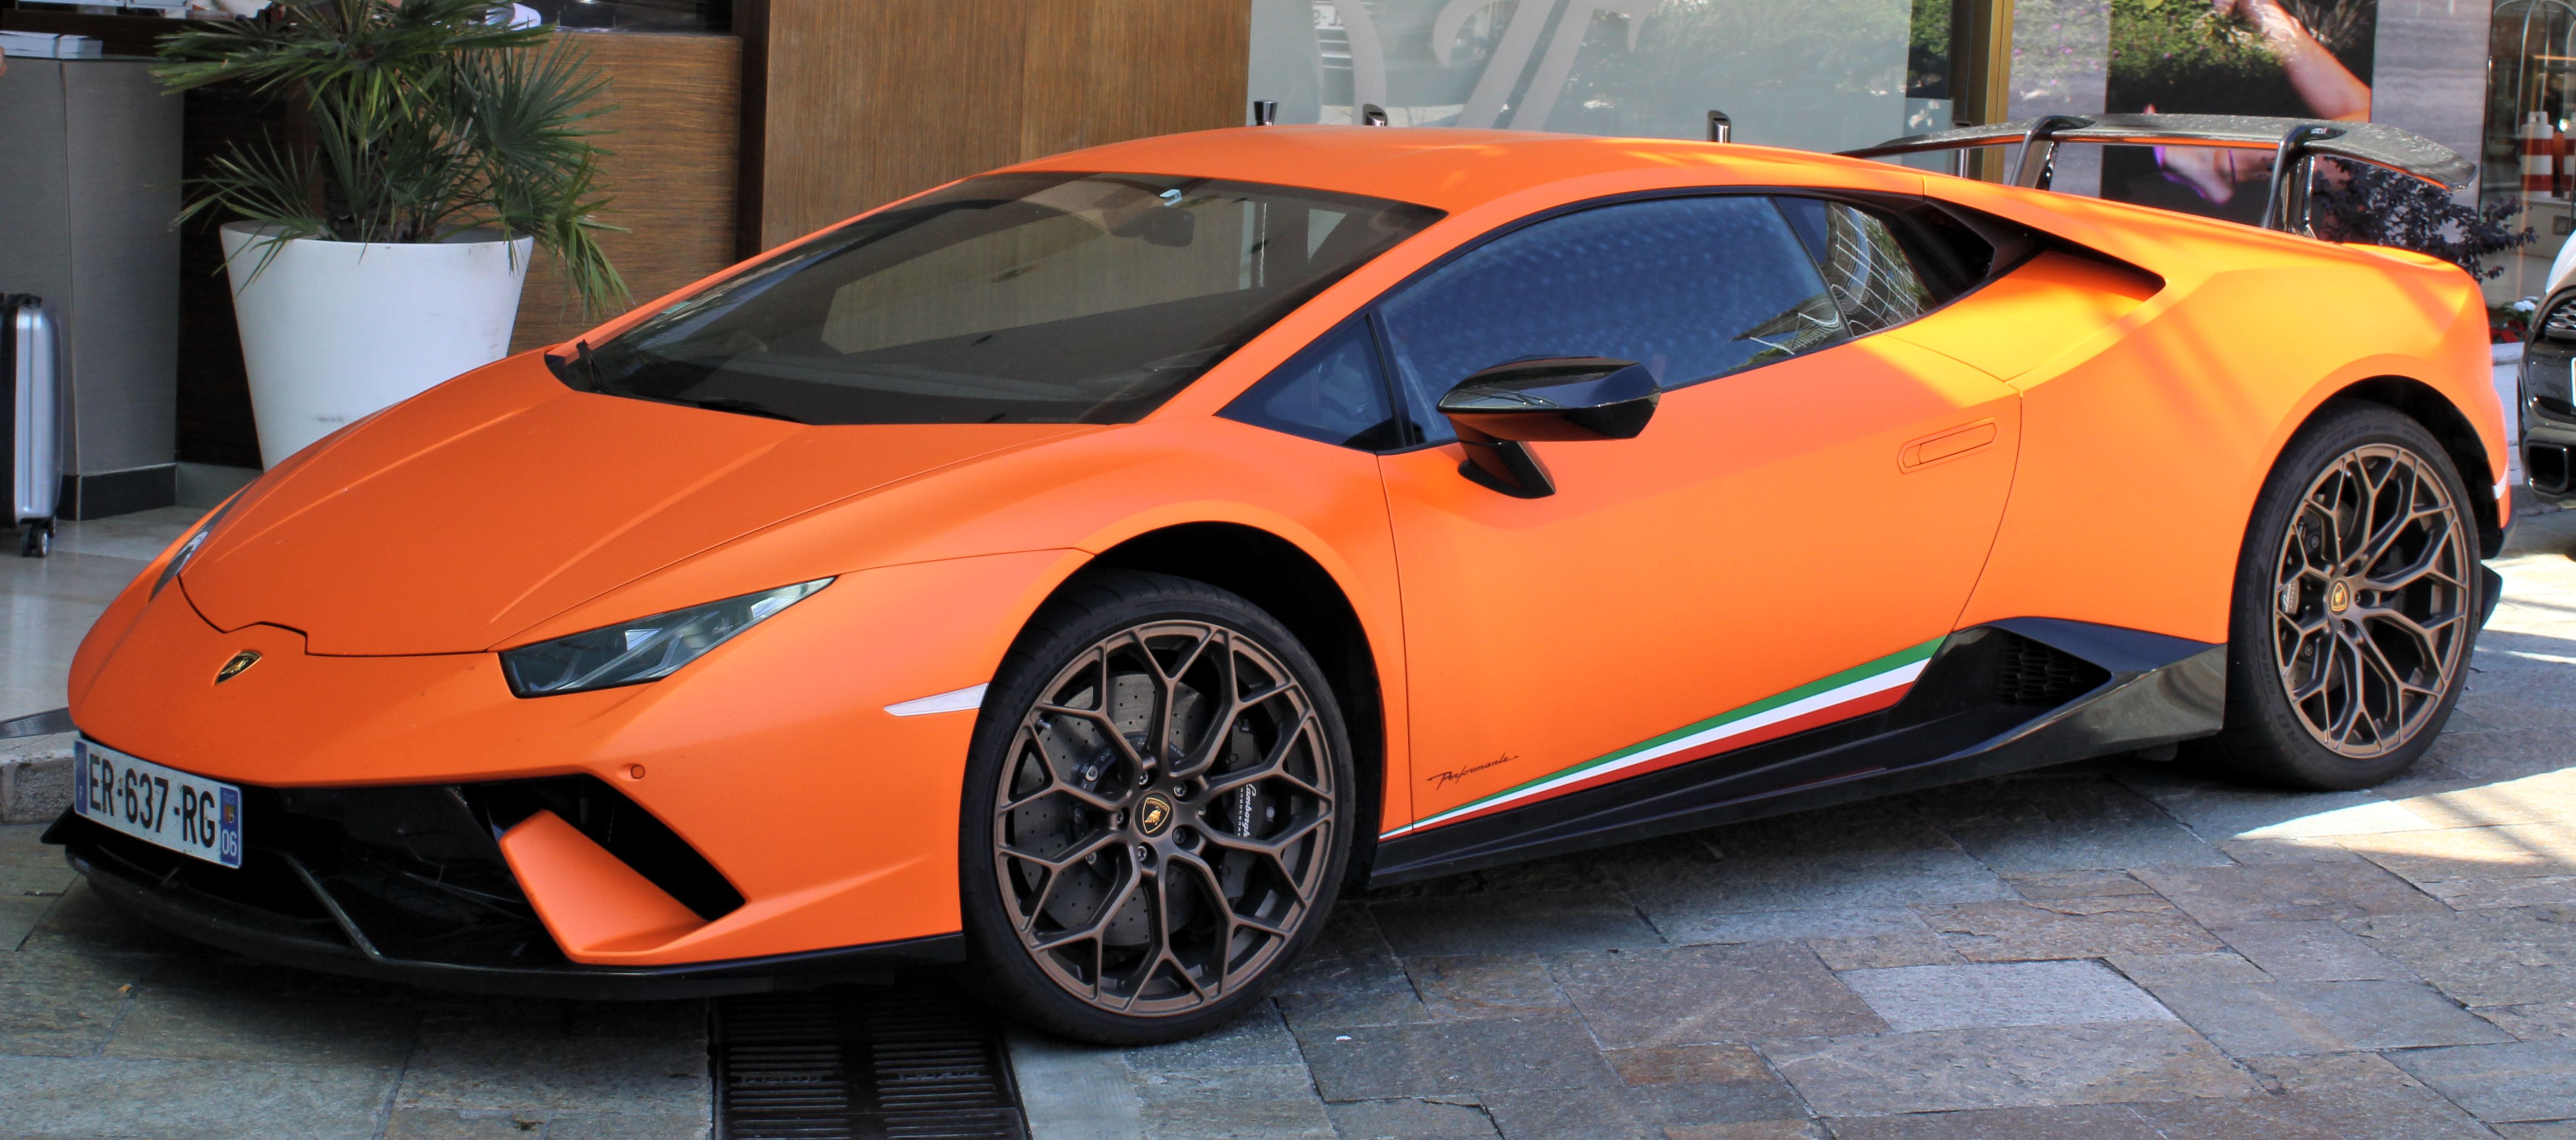 Lamborghini_Huracan_Performante_Monaco_IMG_1013